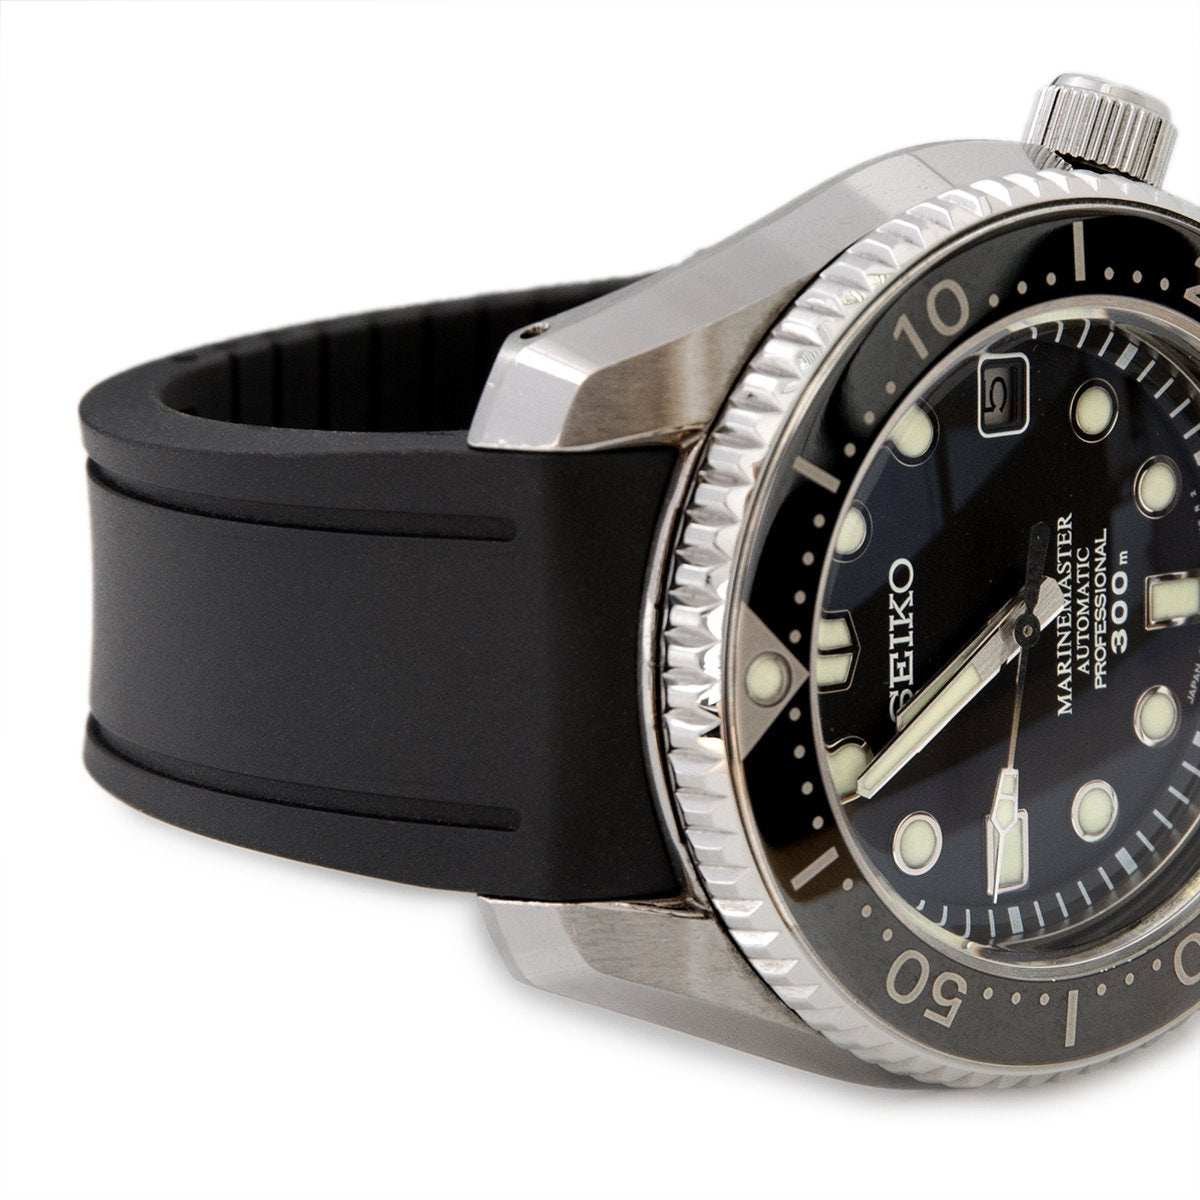  Seiko Prospex Marinemaster MM300 Diver Automatic SBDX017 Strapcode Watch Bands